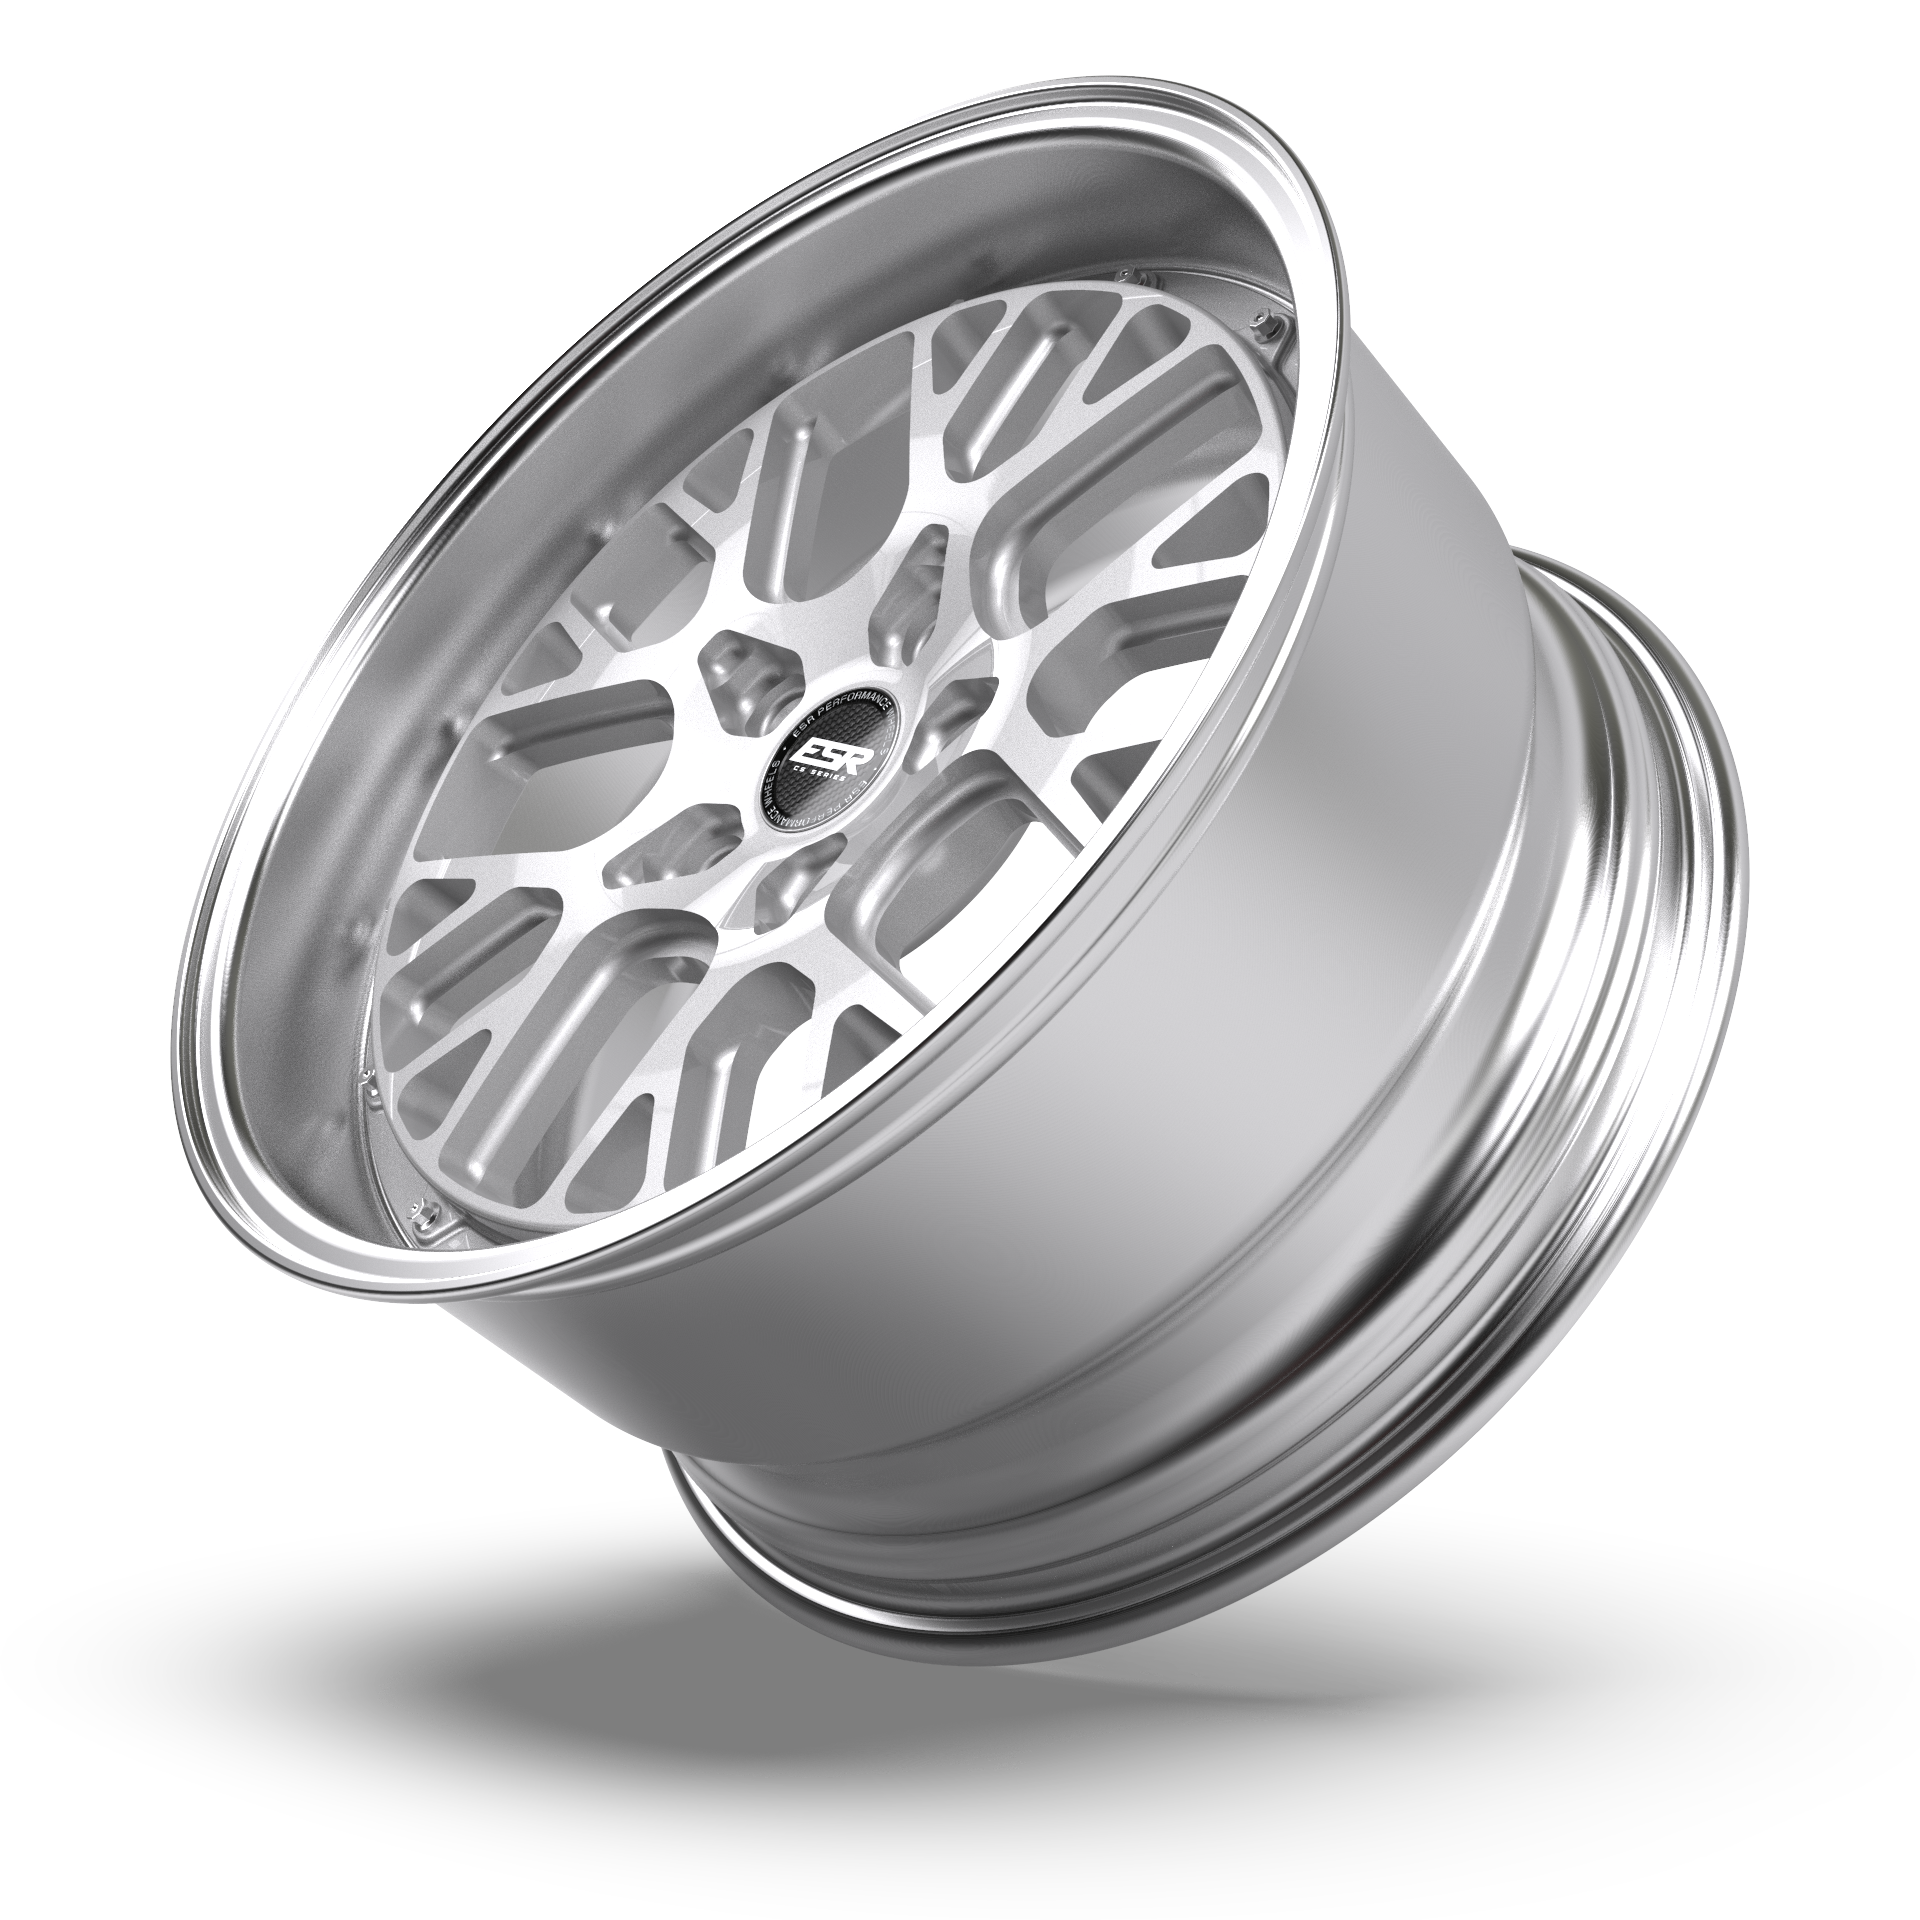 ESR Wheels *NEW* CS11 Gloss White-Wheels-ESR Wheels-JDMuscle